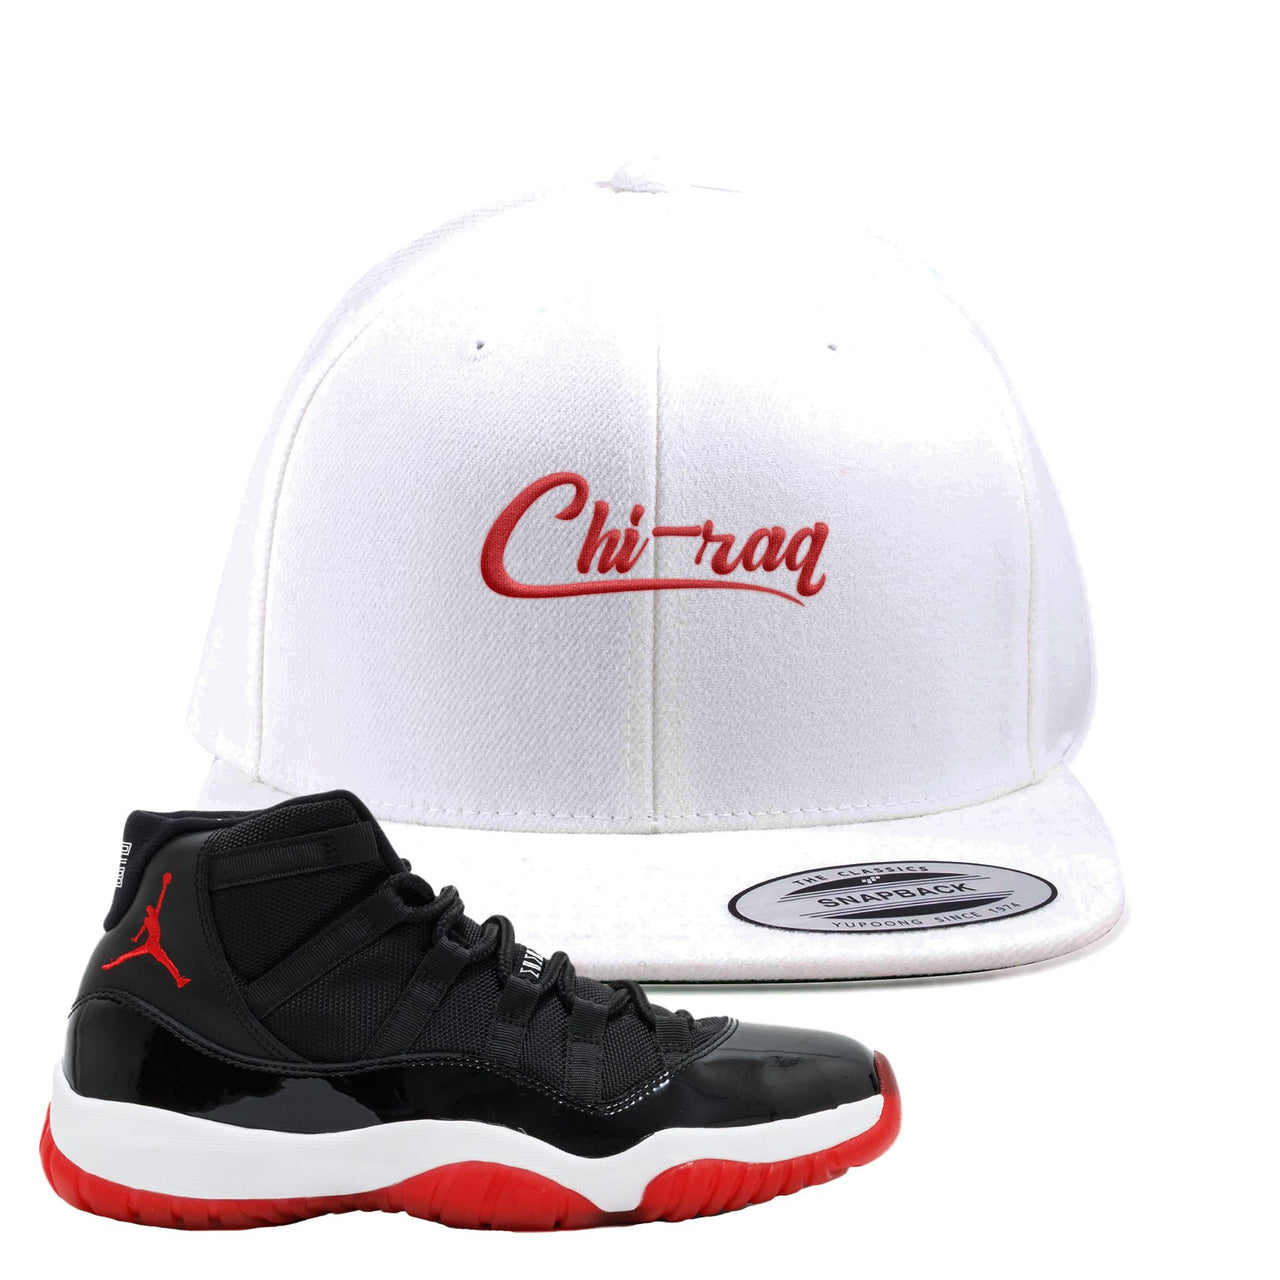 Jordan 11 Bred Chi-raq White Sneaker Hook Up Snapback Hat